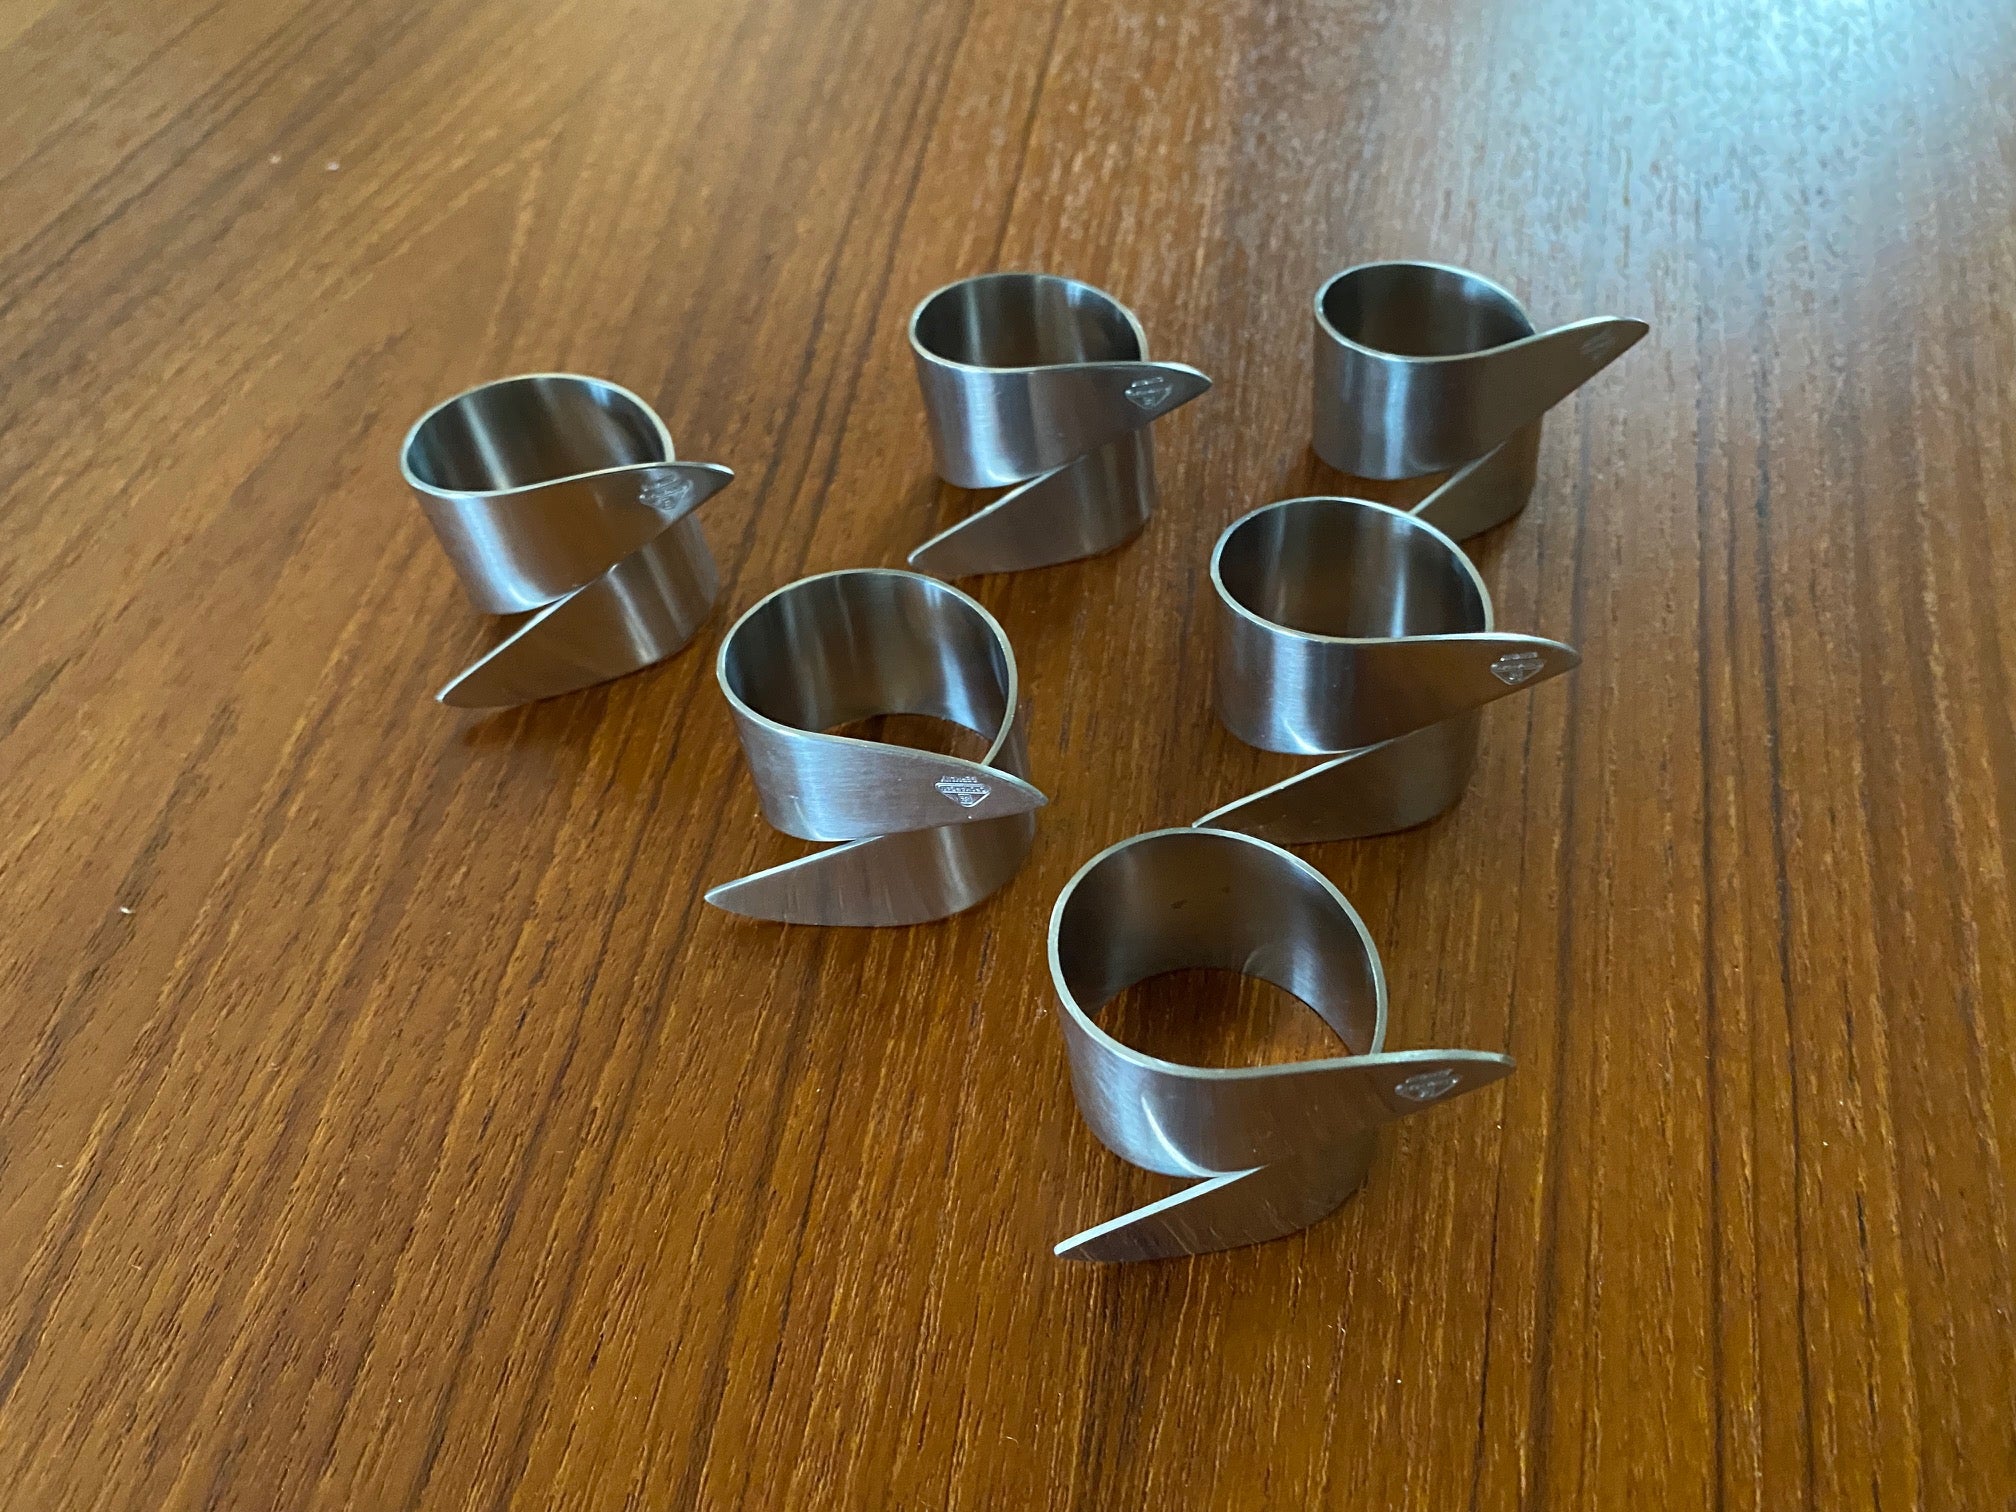 Set of 6 Cromargan Stainless Steel Napkin Rings